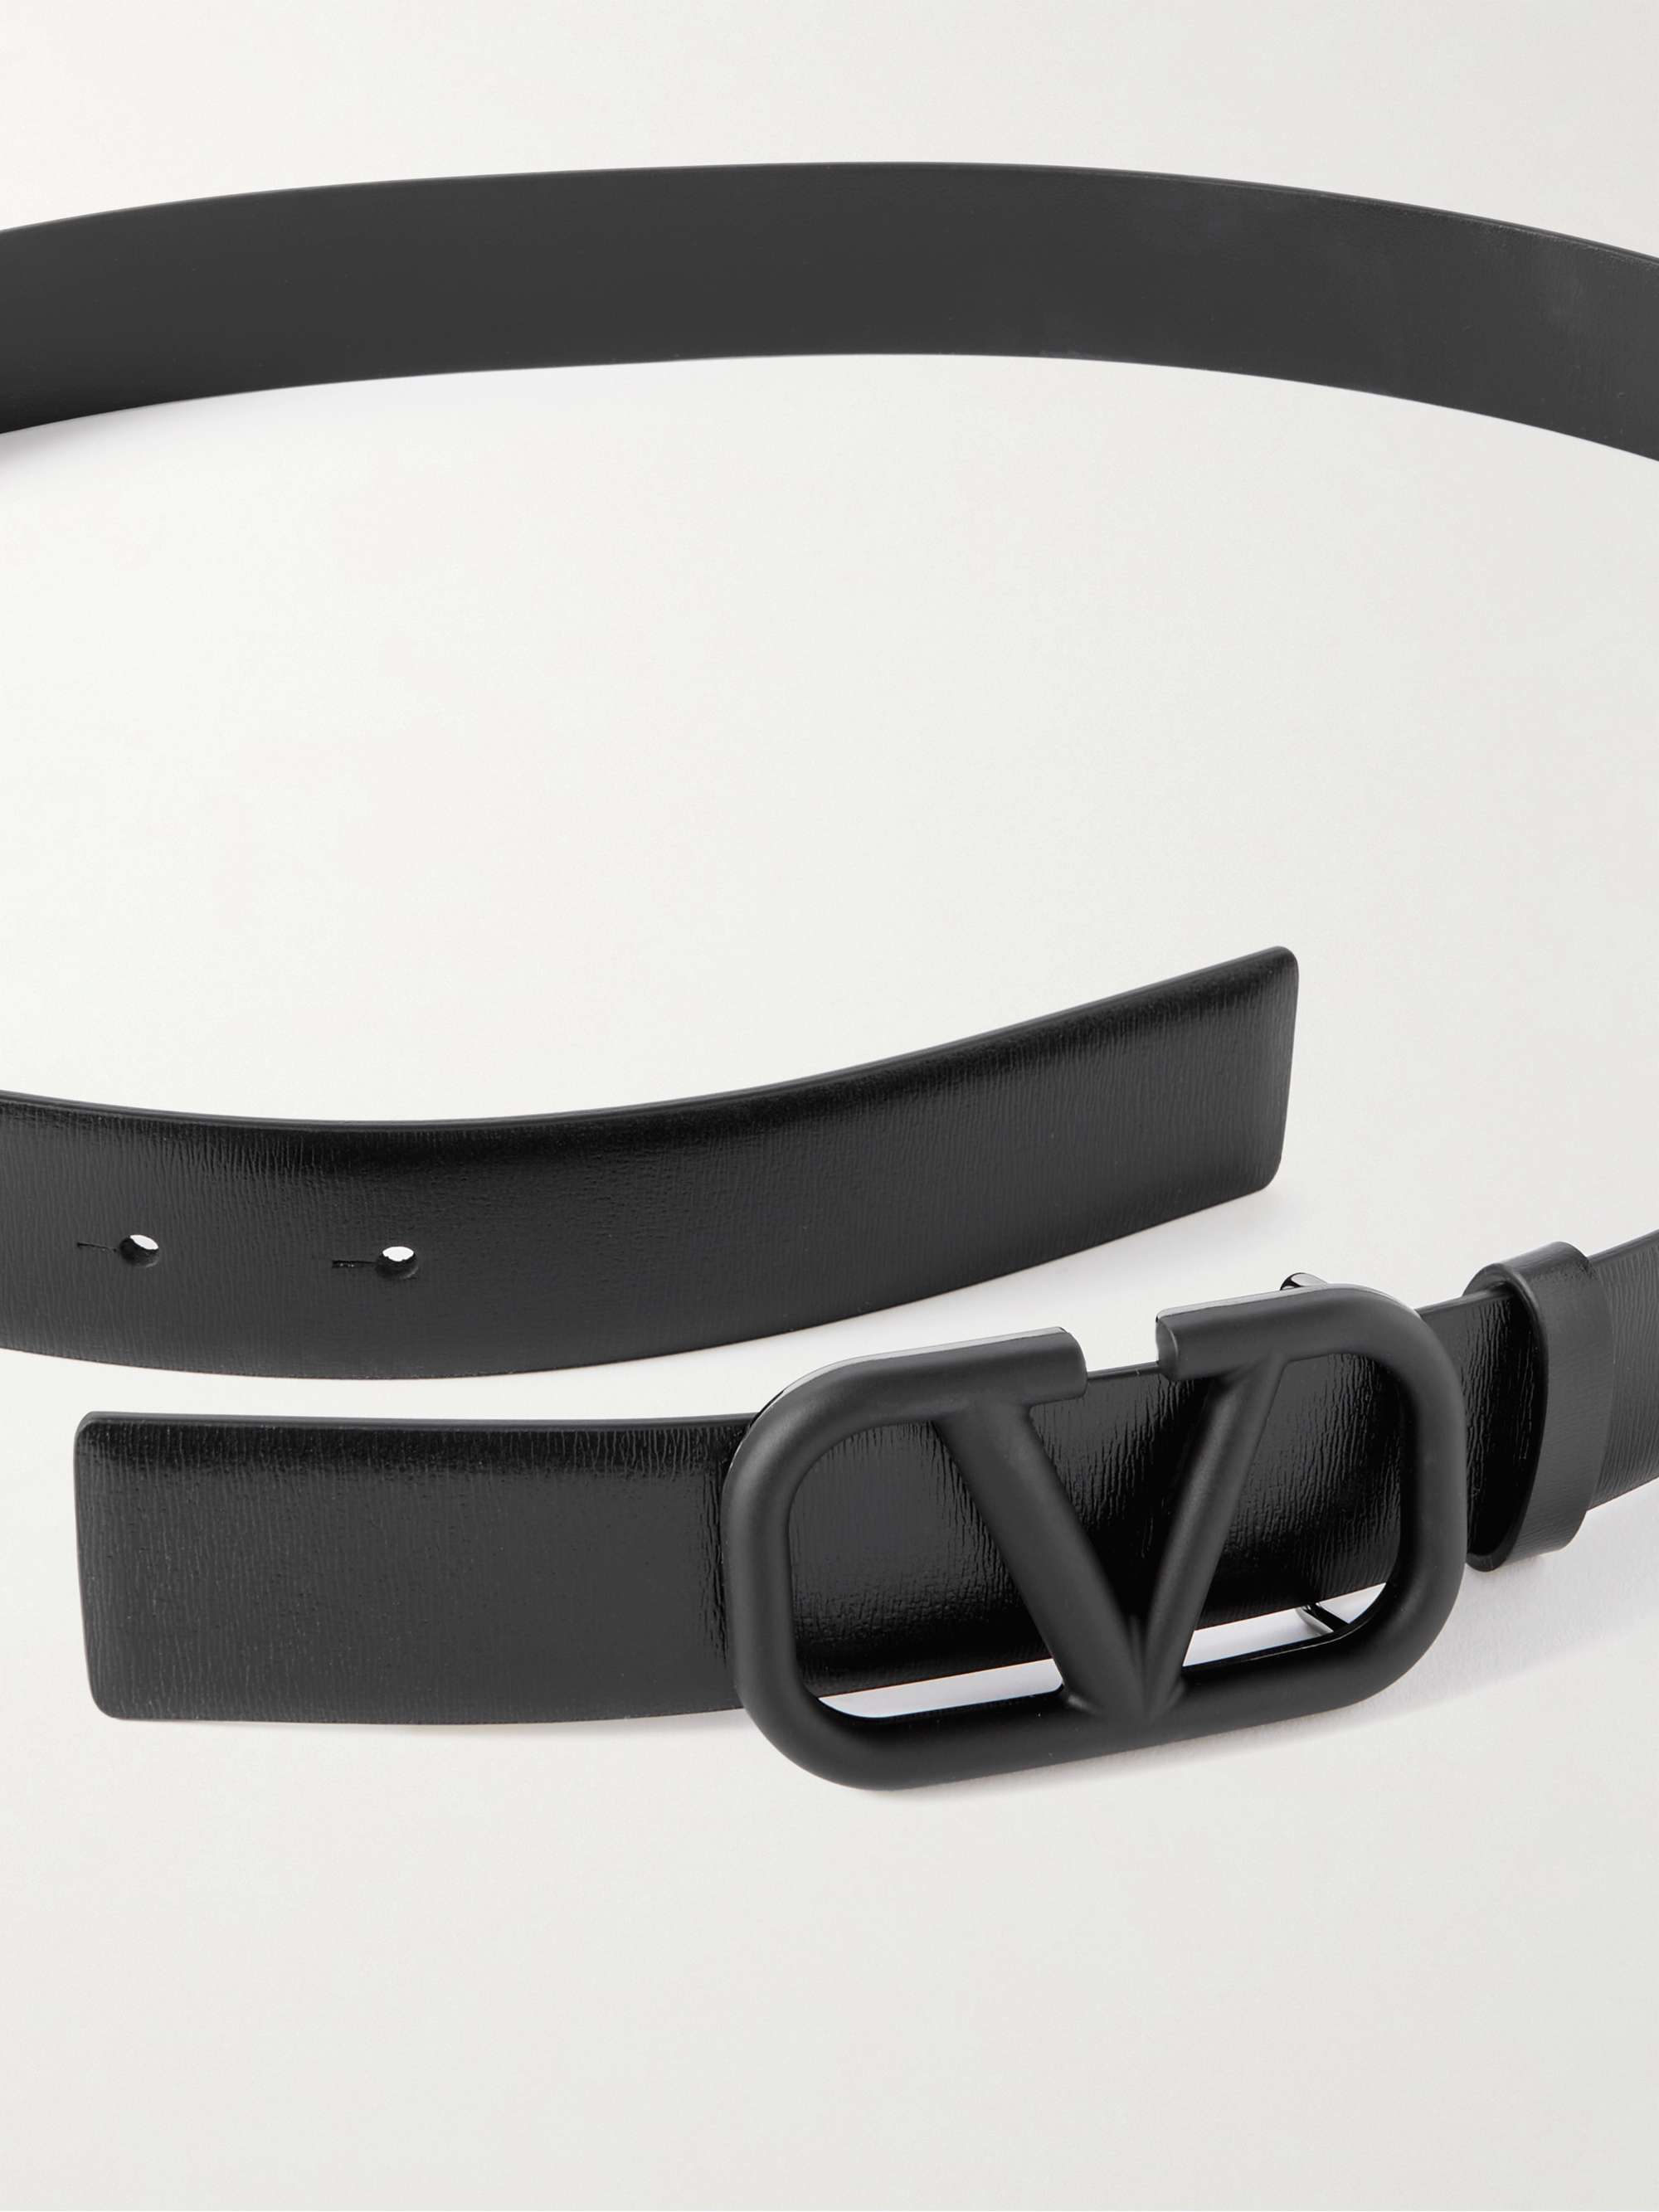 Men's Valentino Garavani Designer Belts